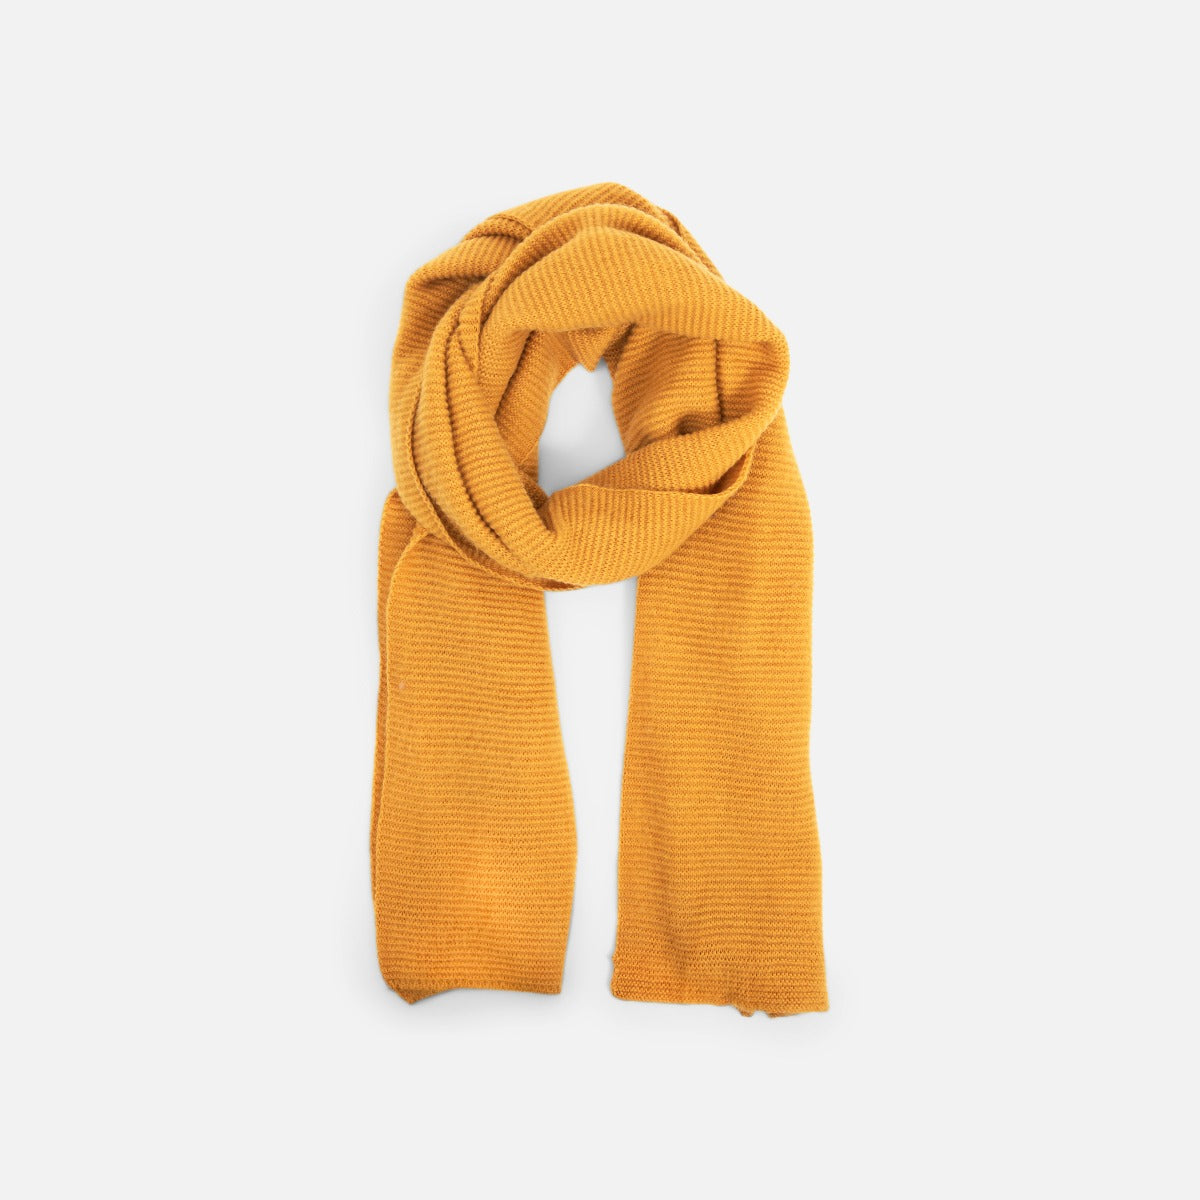 Ocher yellow ribbed knit scarf